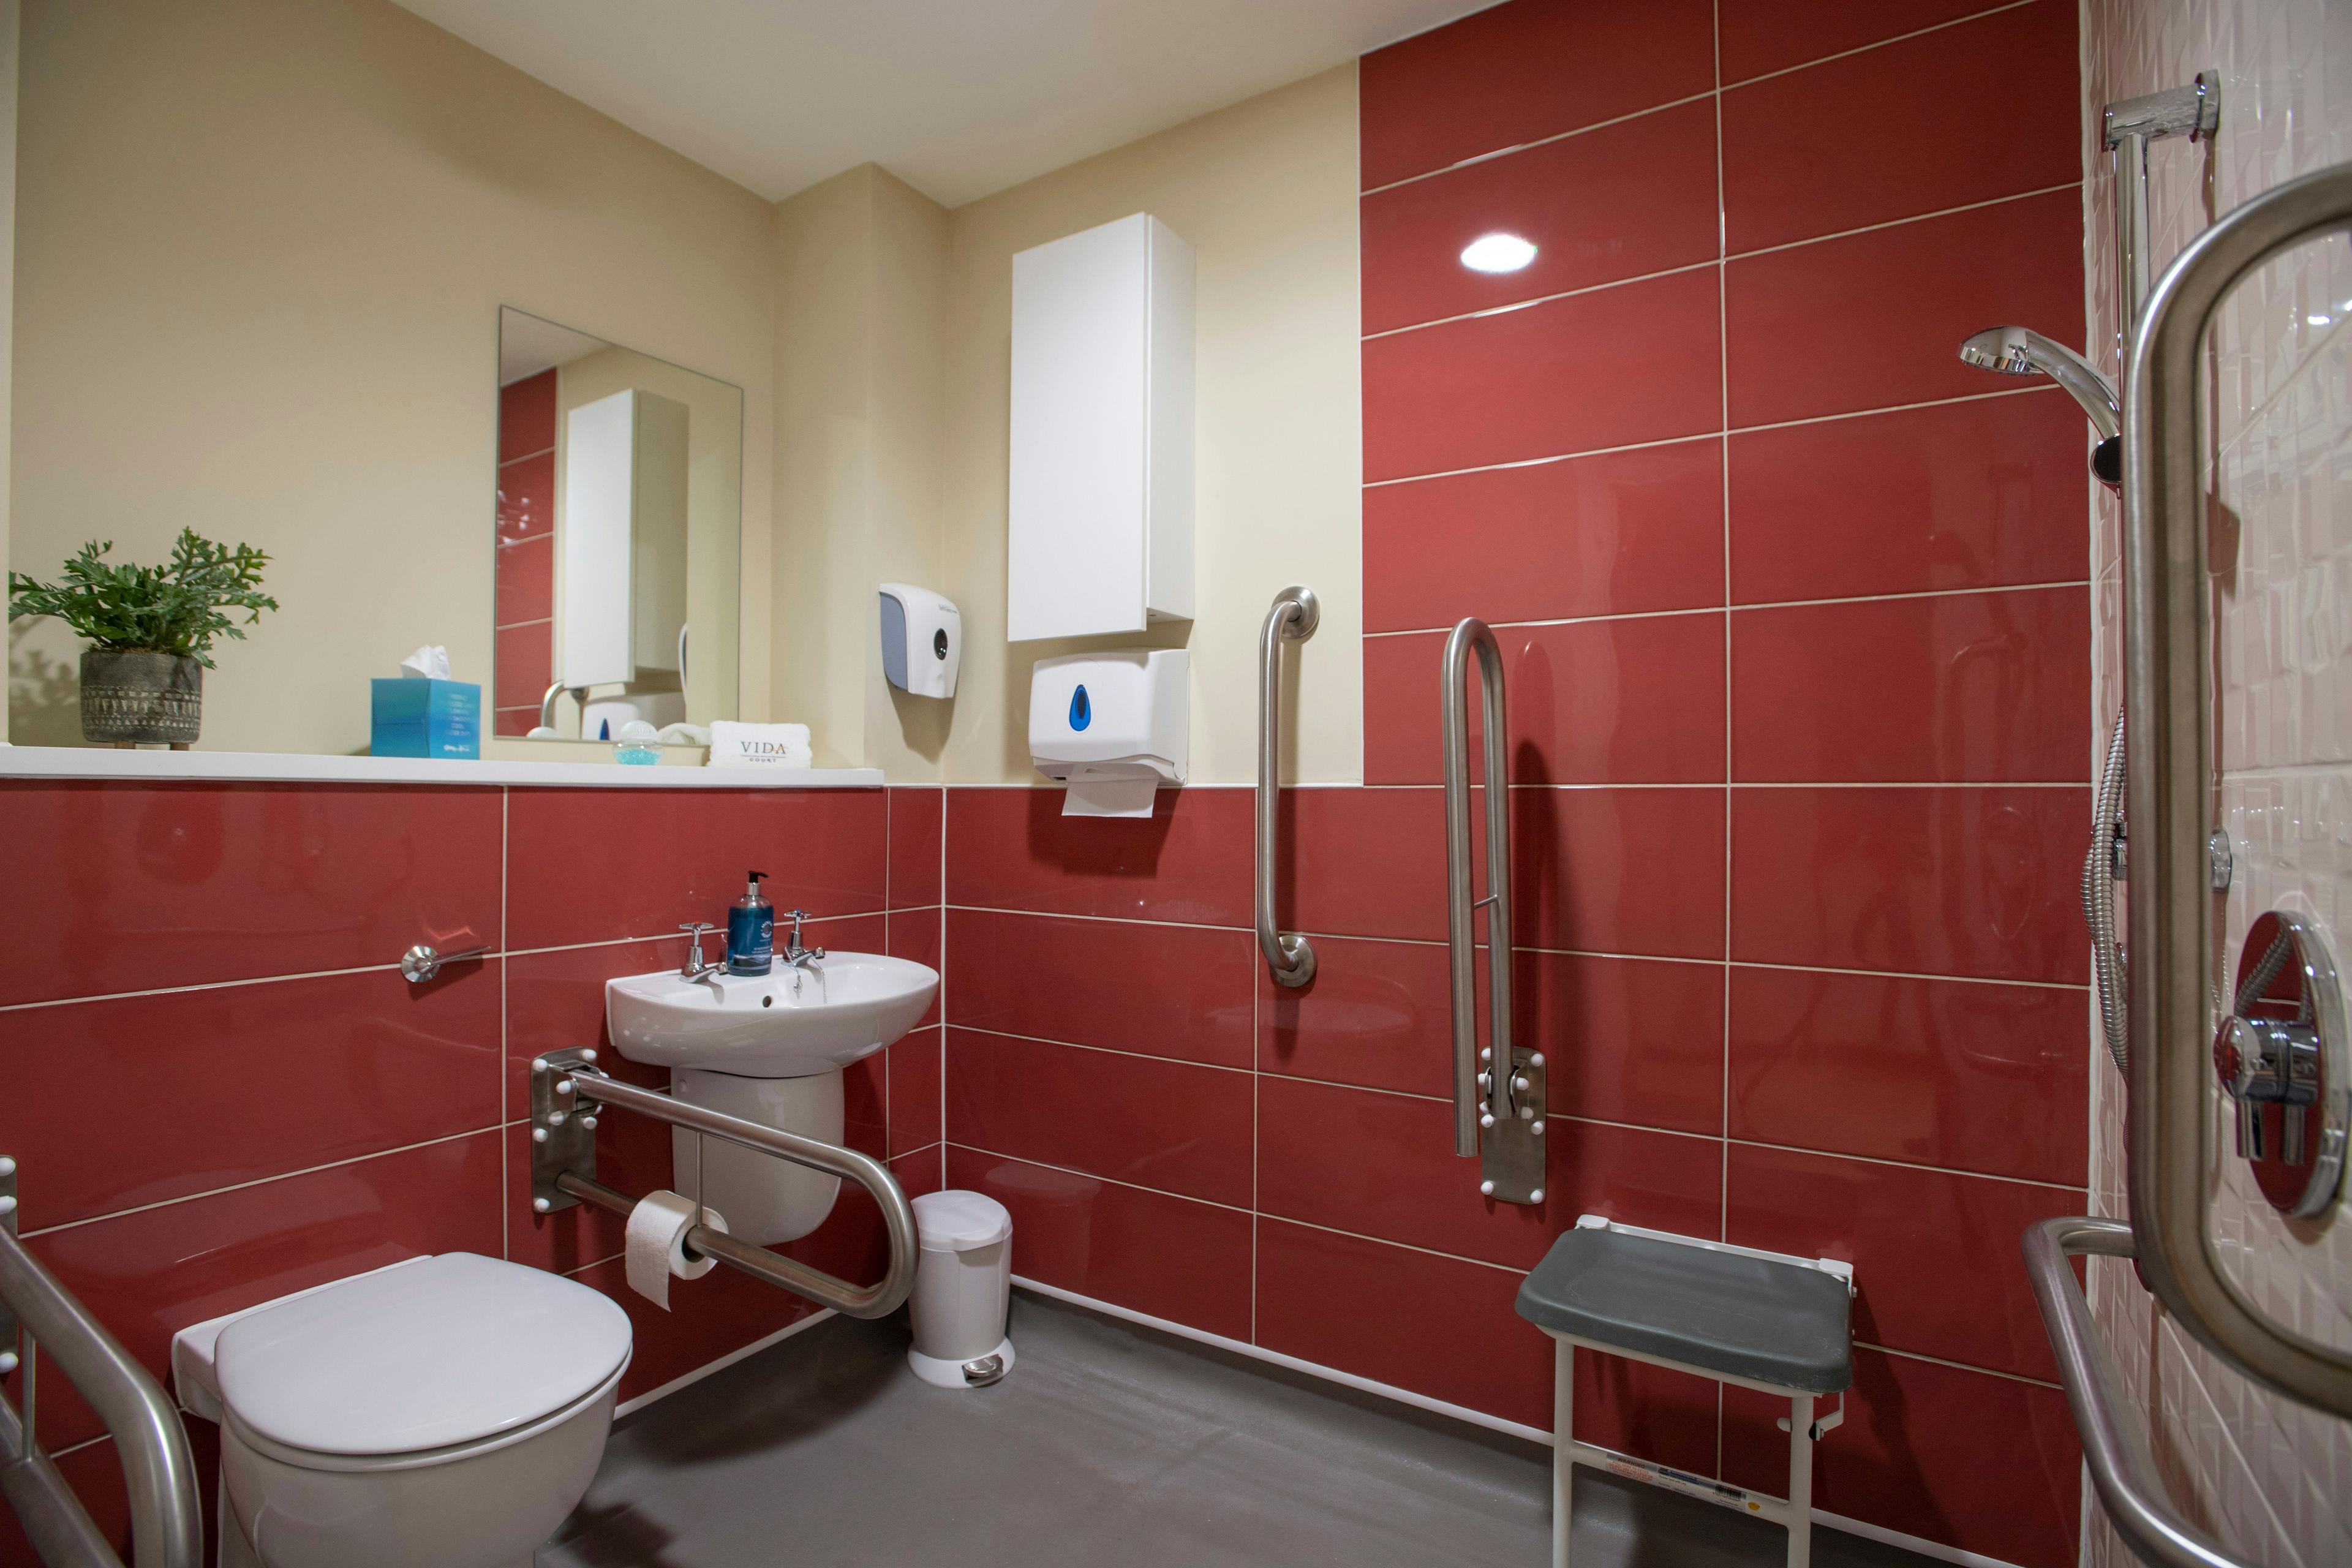 Bathroom of Vida Court on Harrogate, Yorkshire